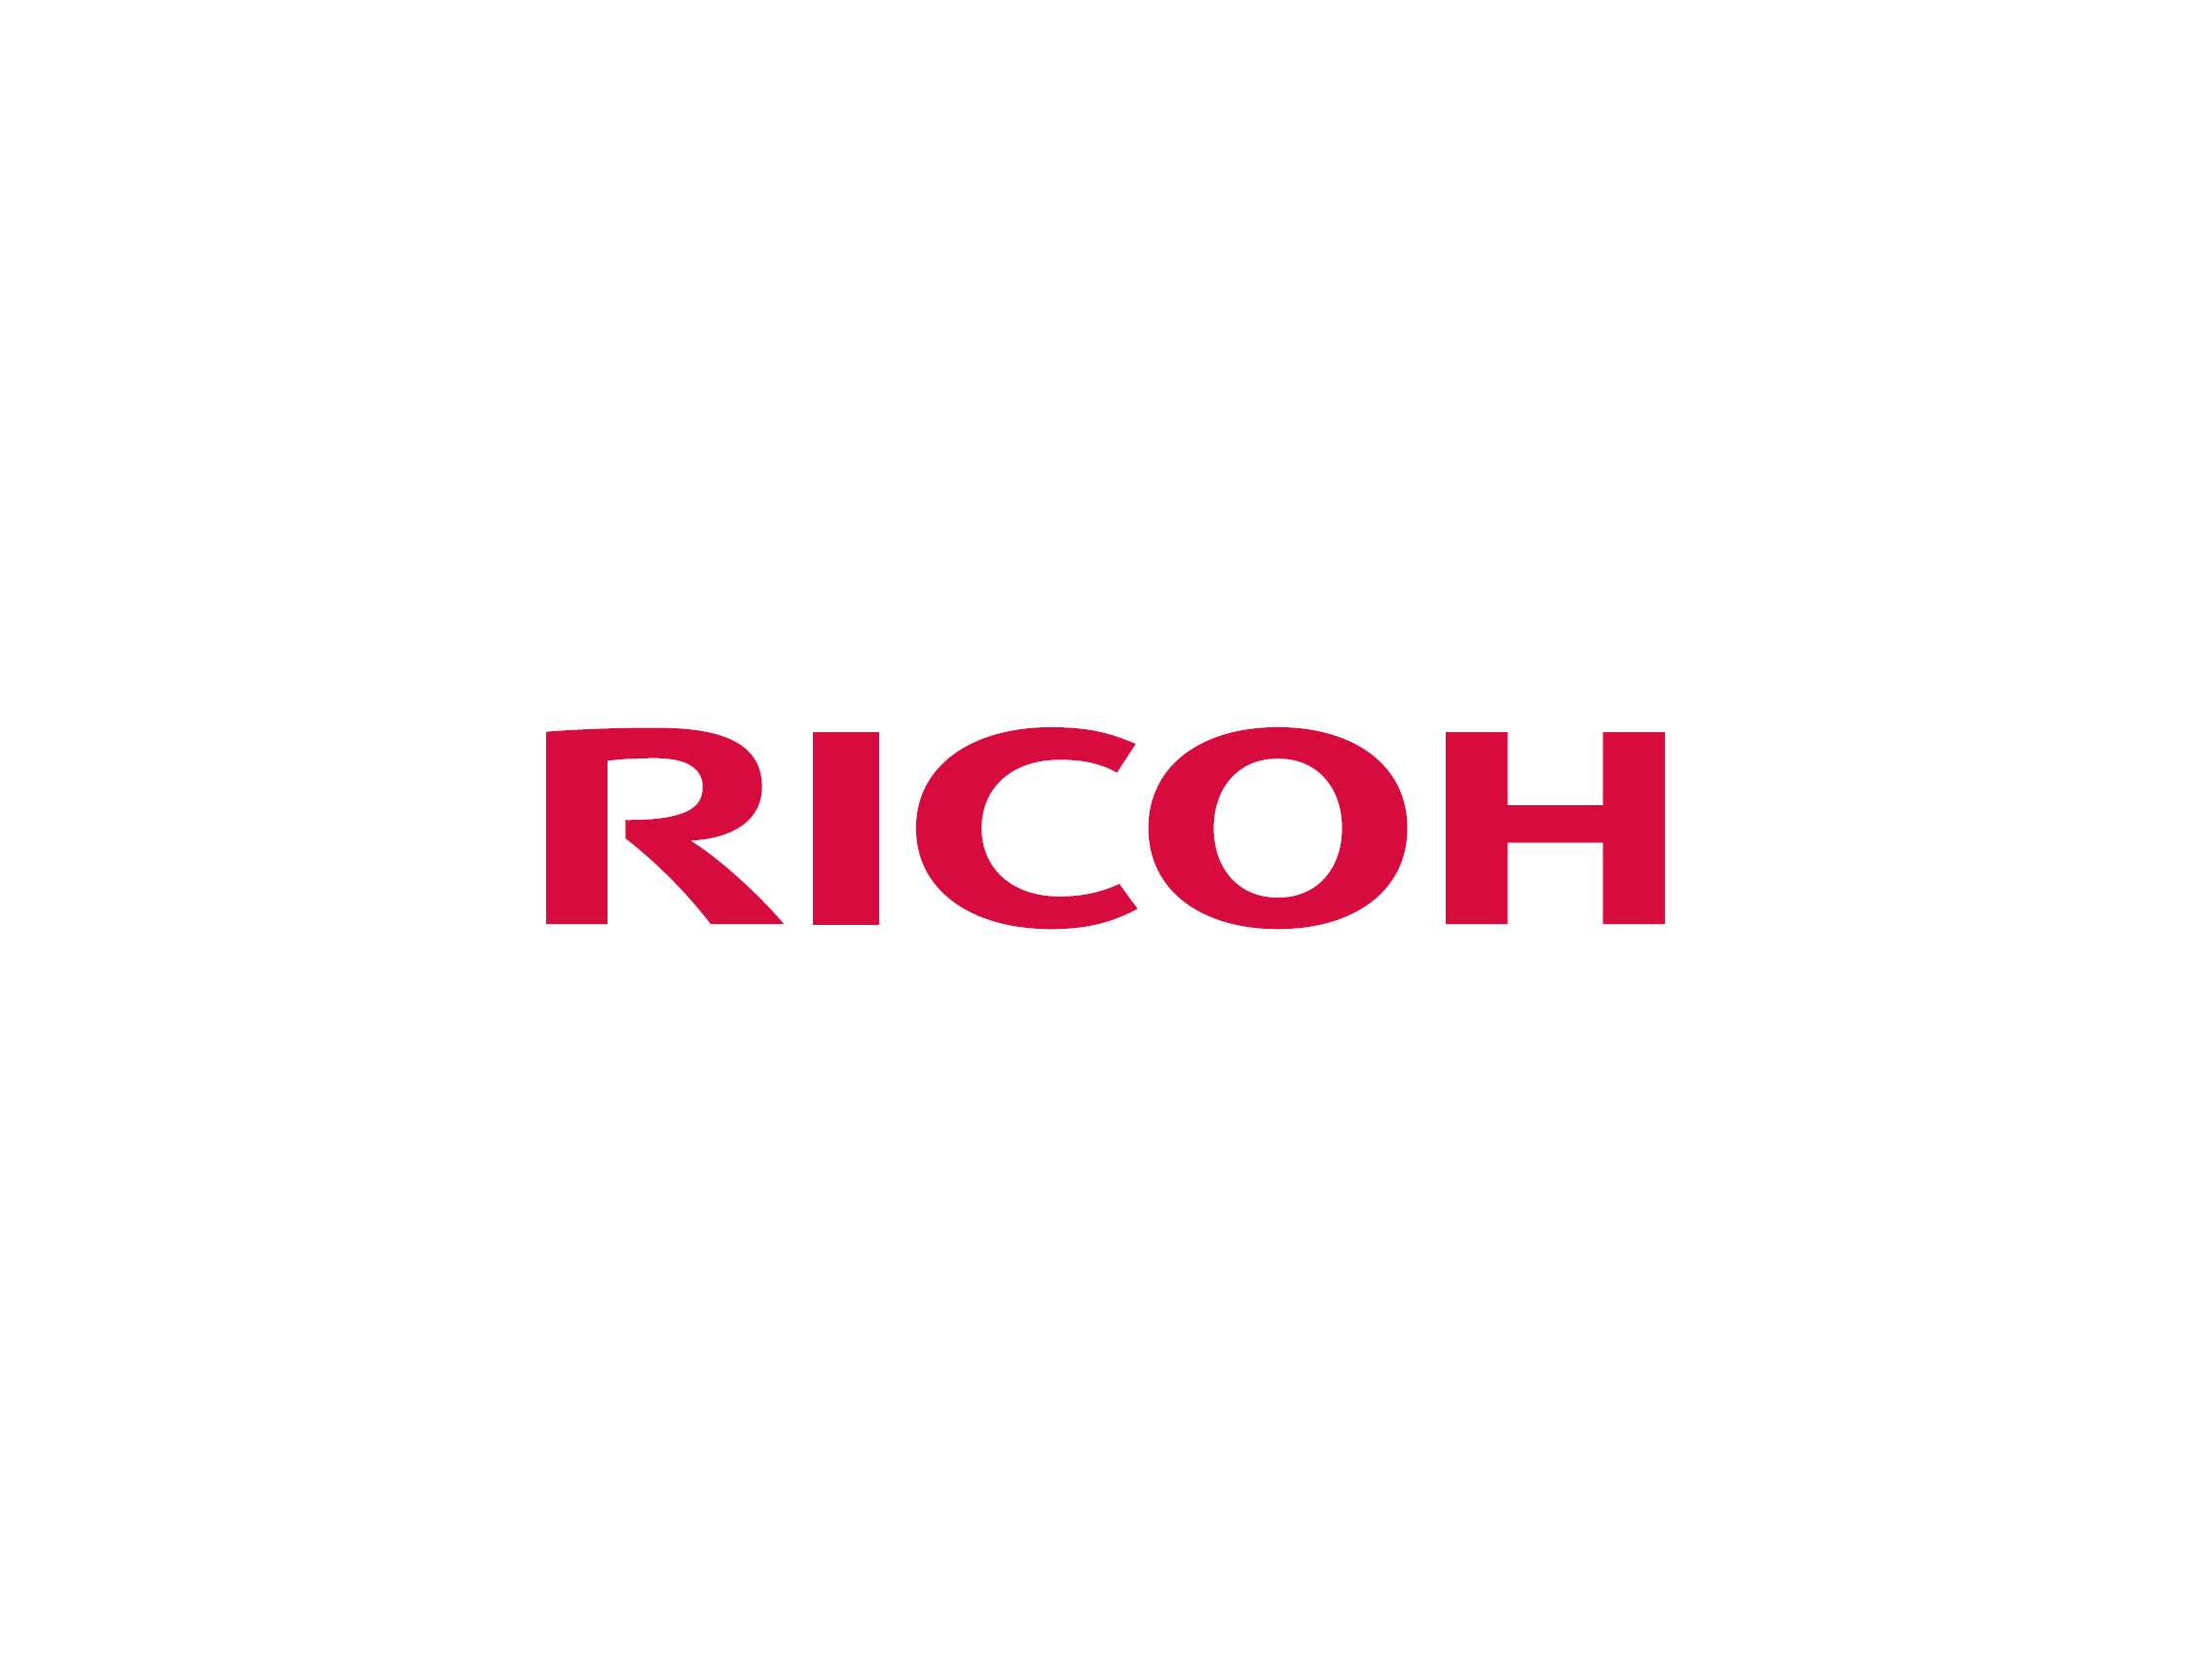 Ricoh Imagine Change Logo - Ricoh Logos